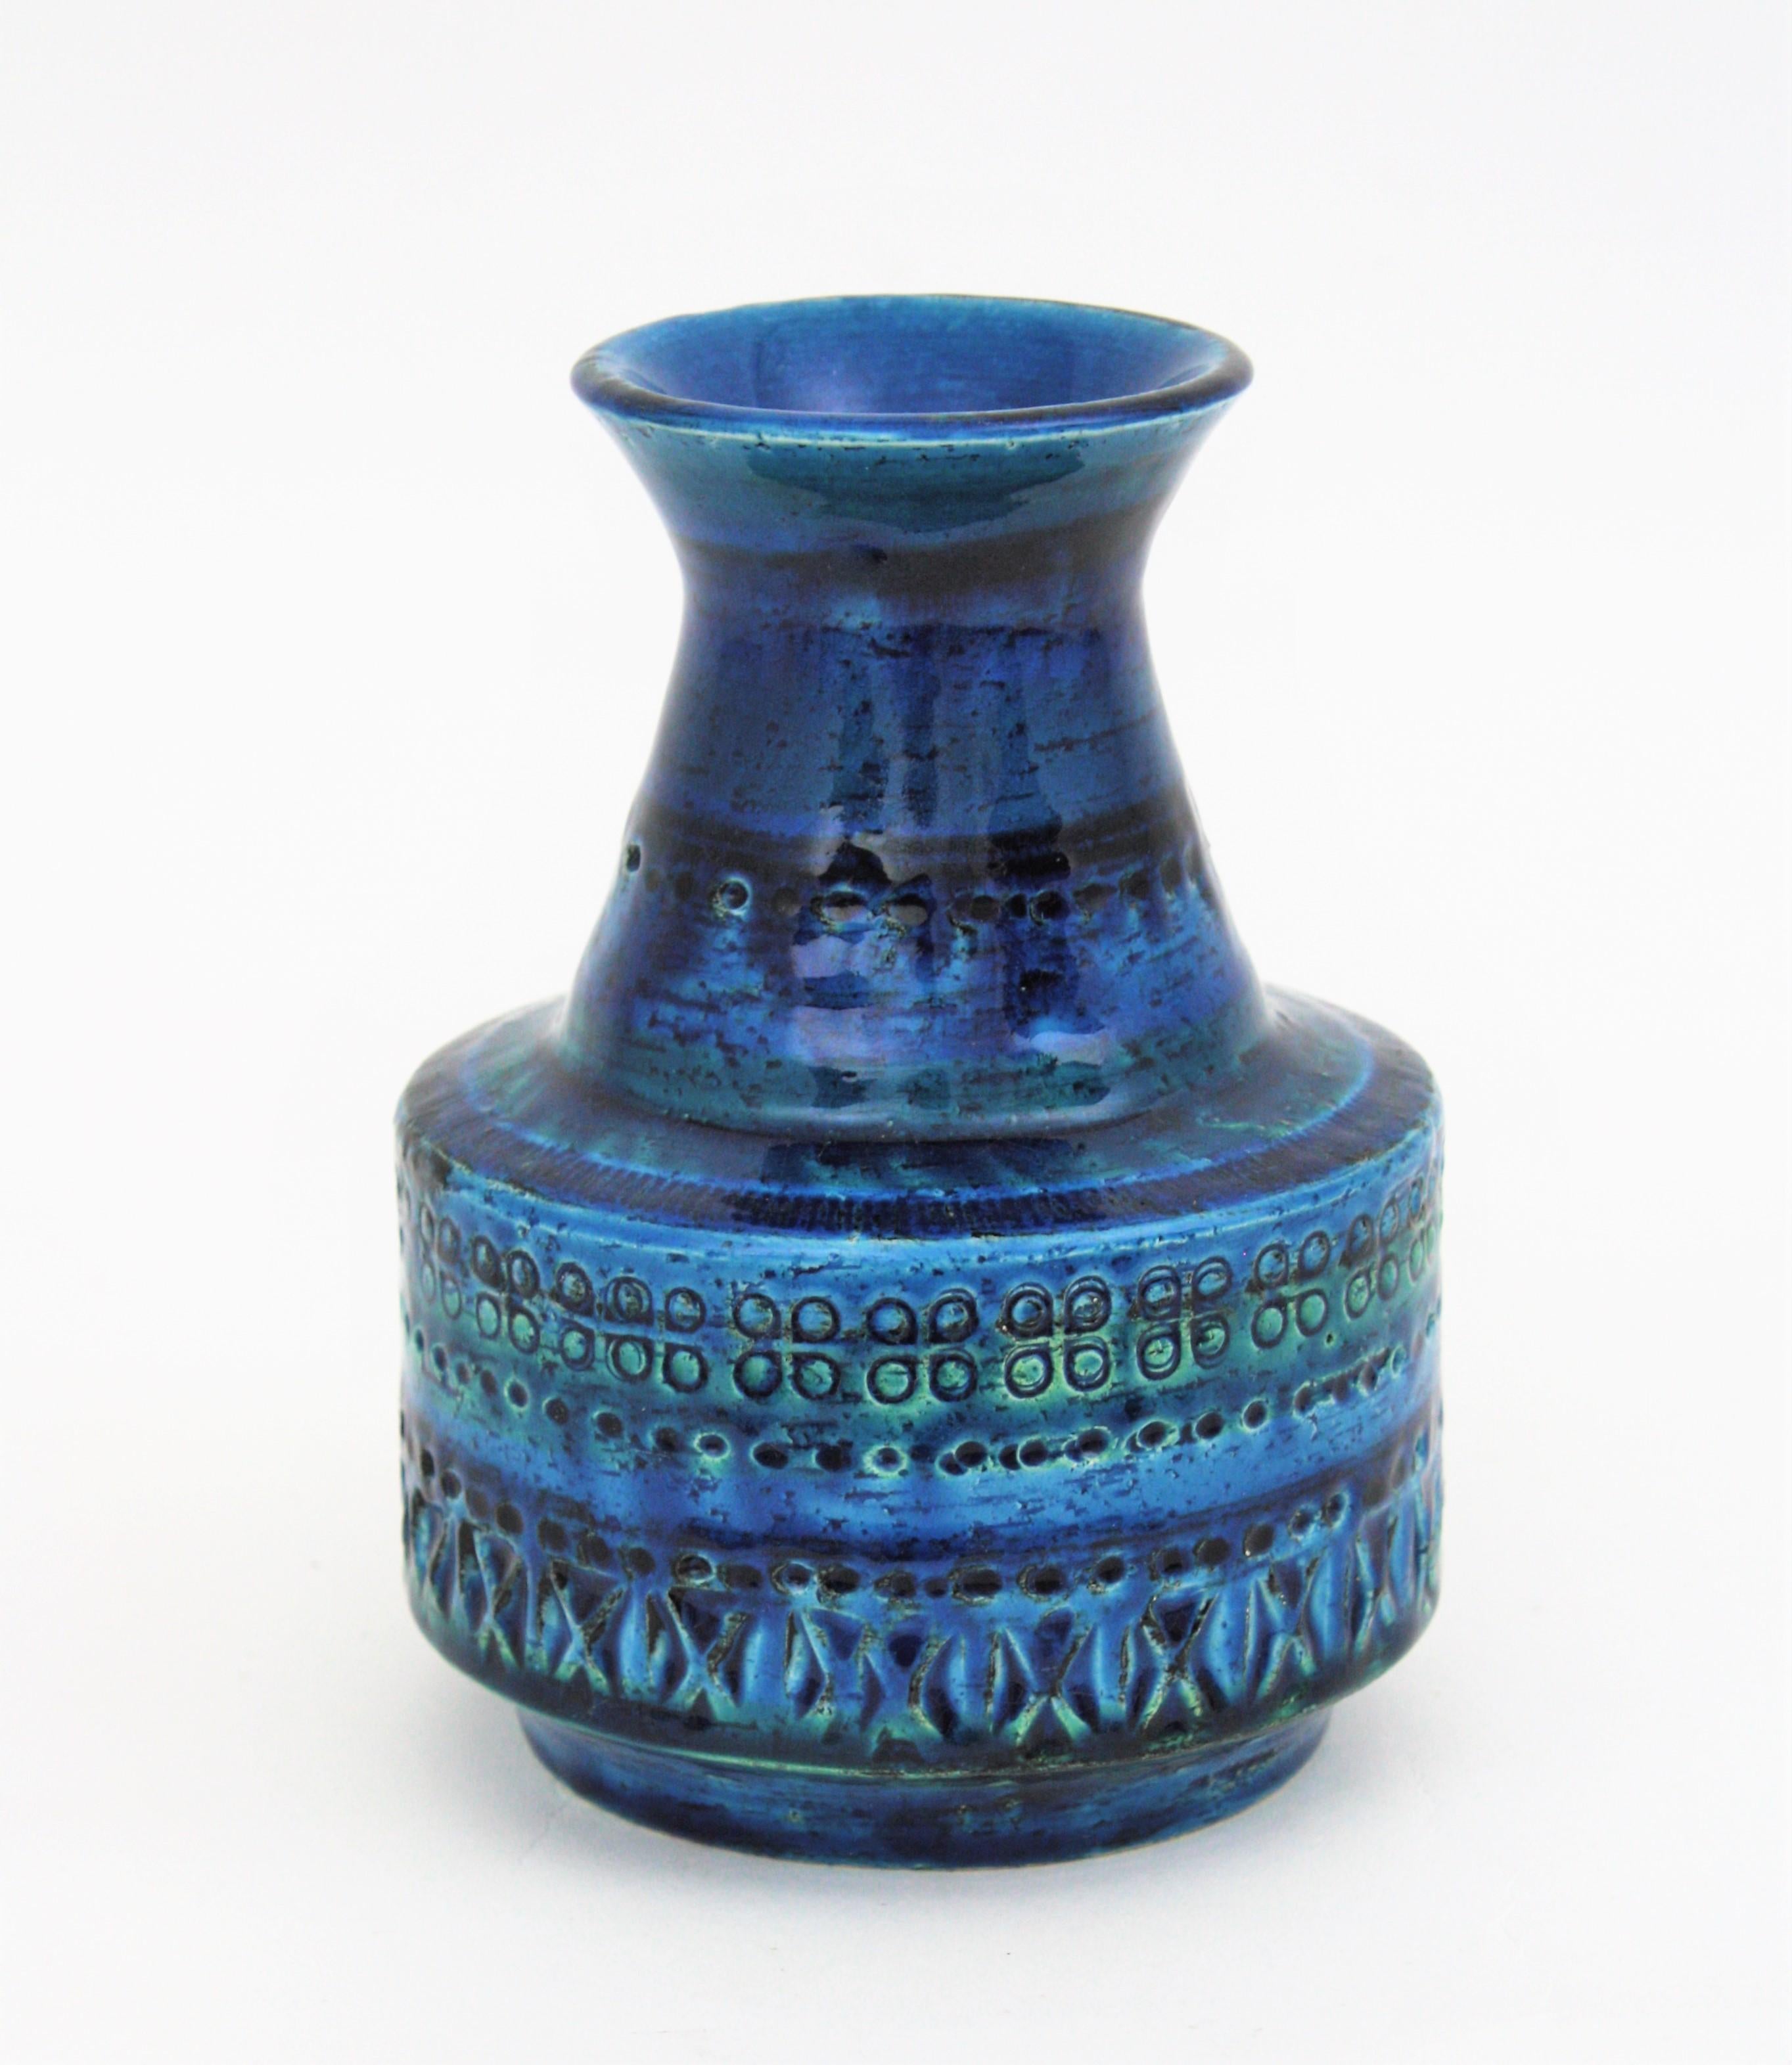 20th Century Bitossi Aldo Londi Rimini Blue Glazed Ceramic Conic Vase, 1960s